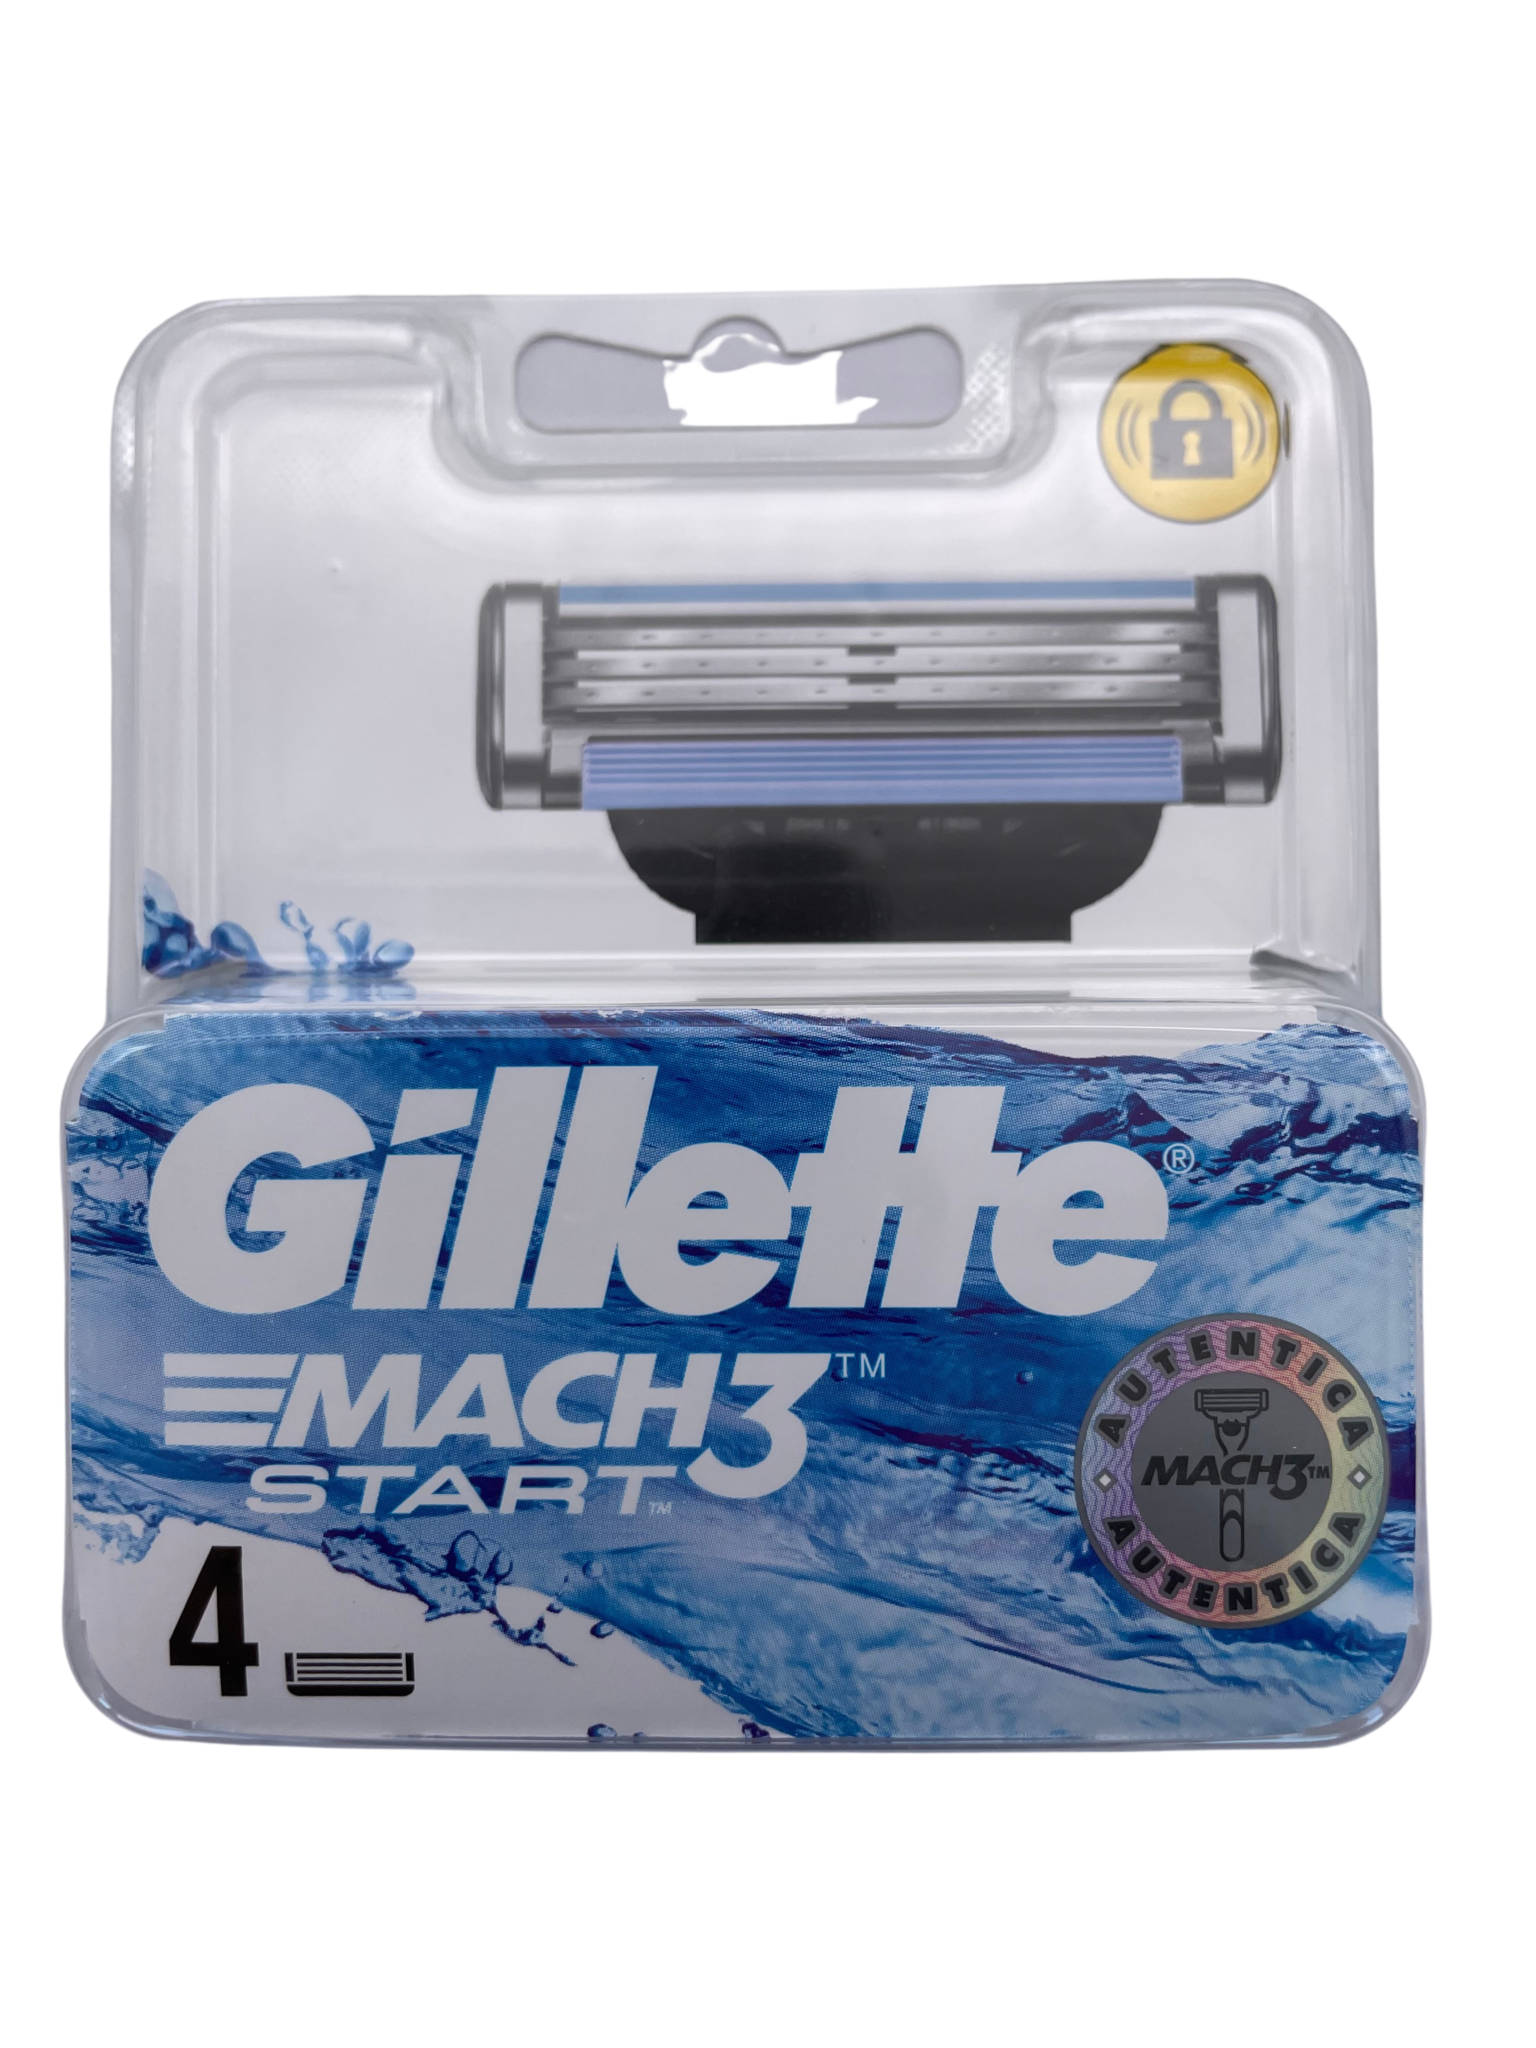 Gillette Mach3 start scheermesje 4 stuks